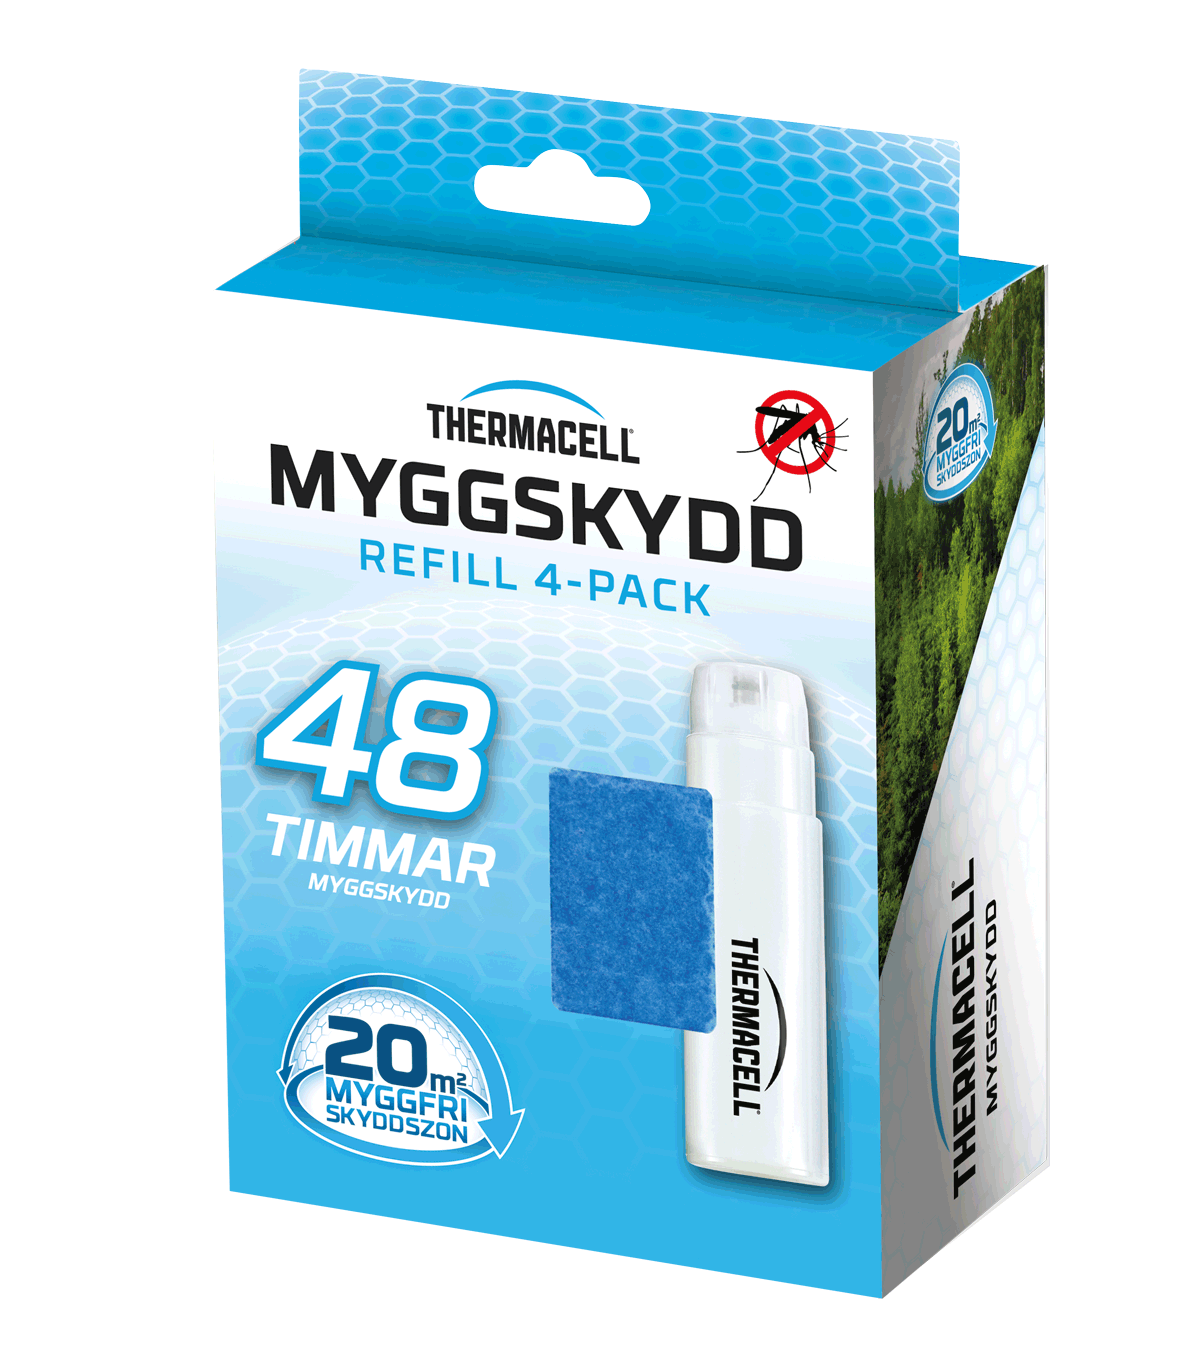 Myggskydd Refill 4-Pack